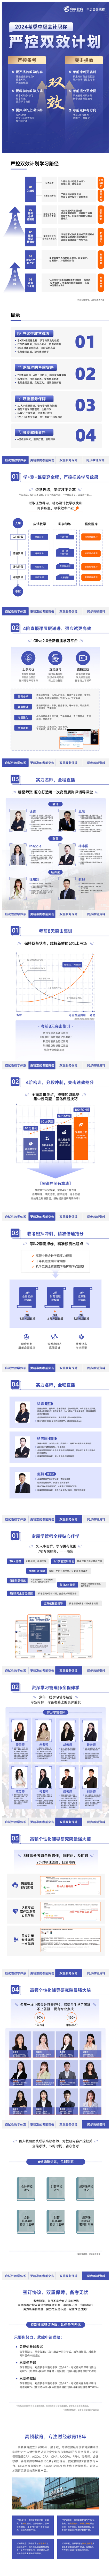 http://simg01.gaodunwangxiao.com/uploadfiles/product-center/202405/20/116e3_20240520115024.png